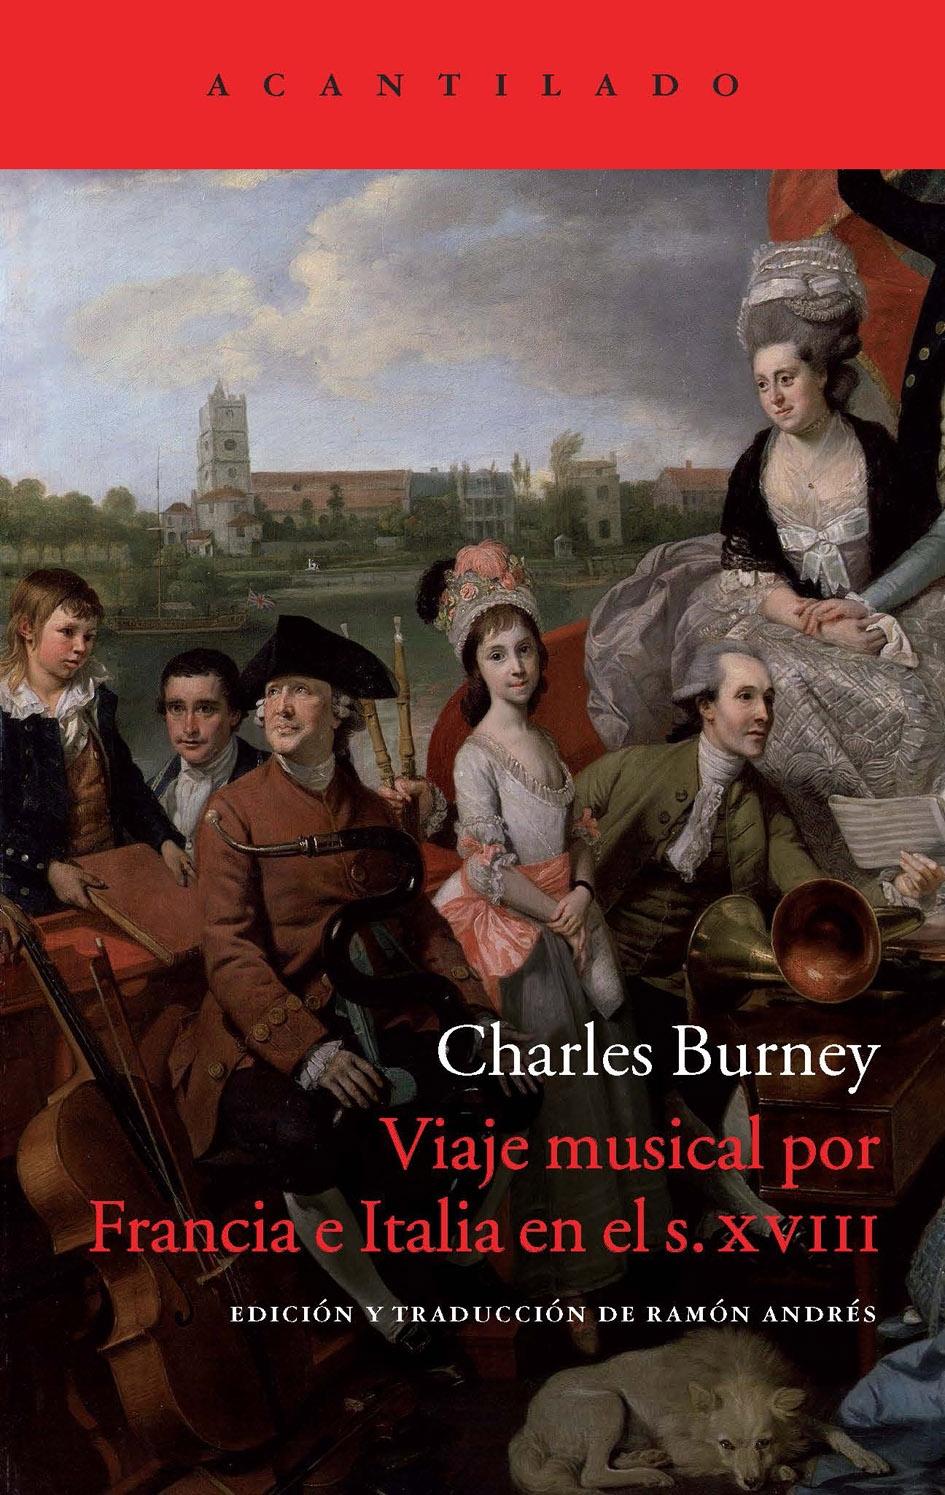 Viaje musical por Francia e Italia en el siglo XVIII "Situación actual de la música en Francia e Italia, o diario de viaje emp". 